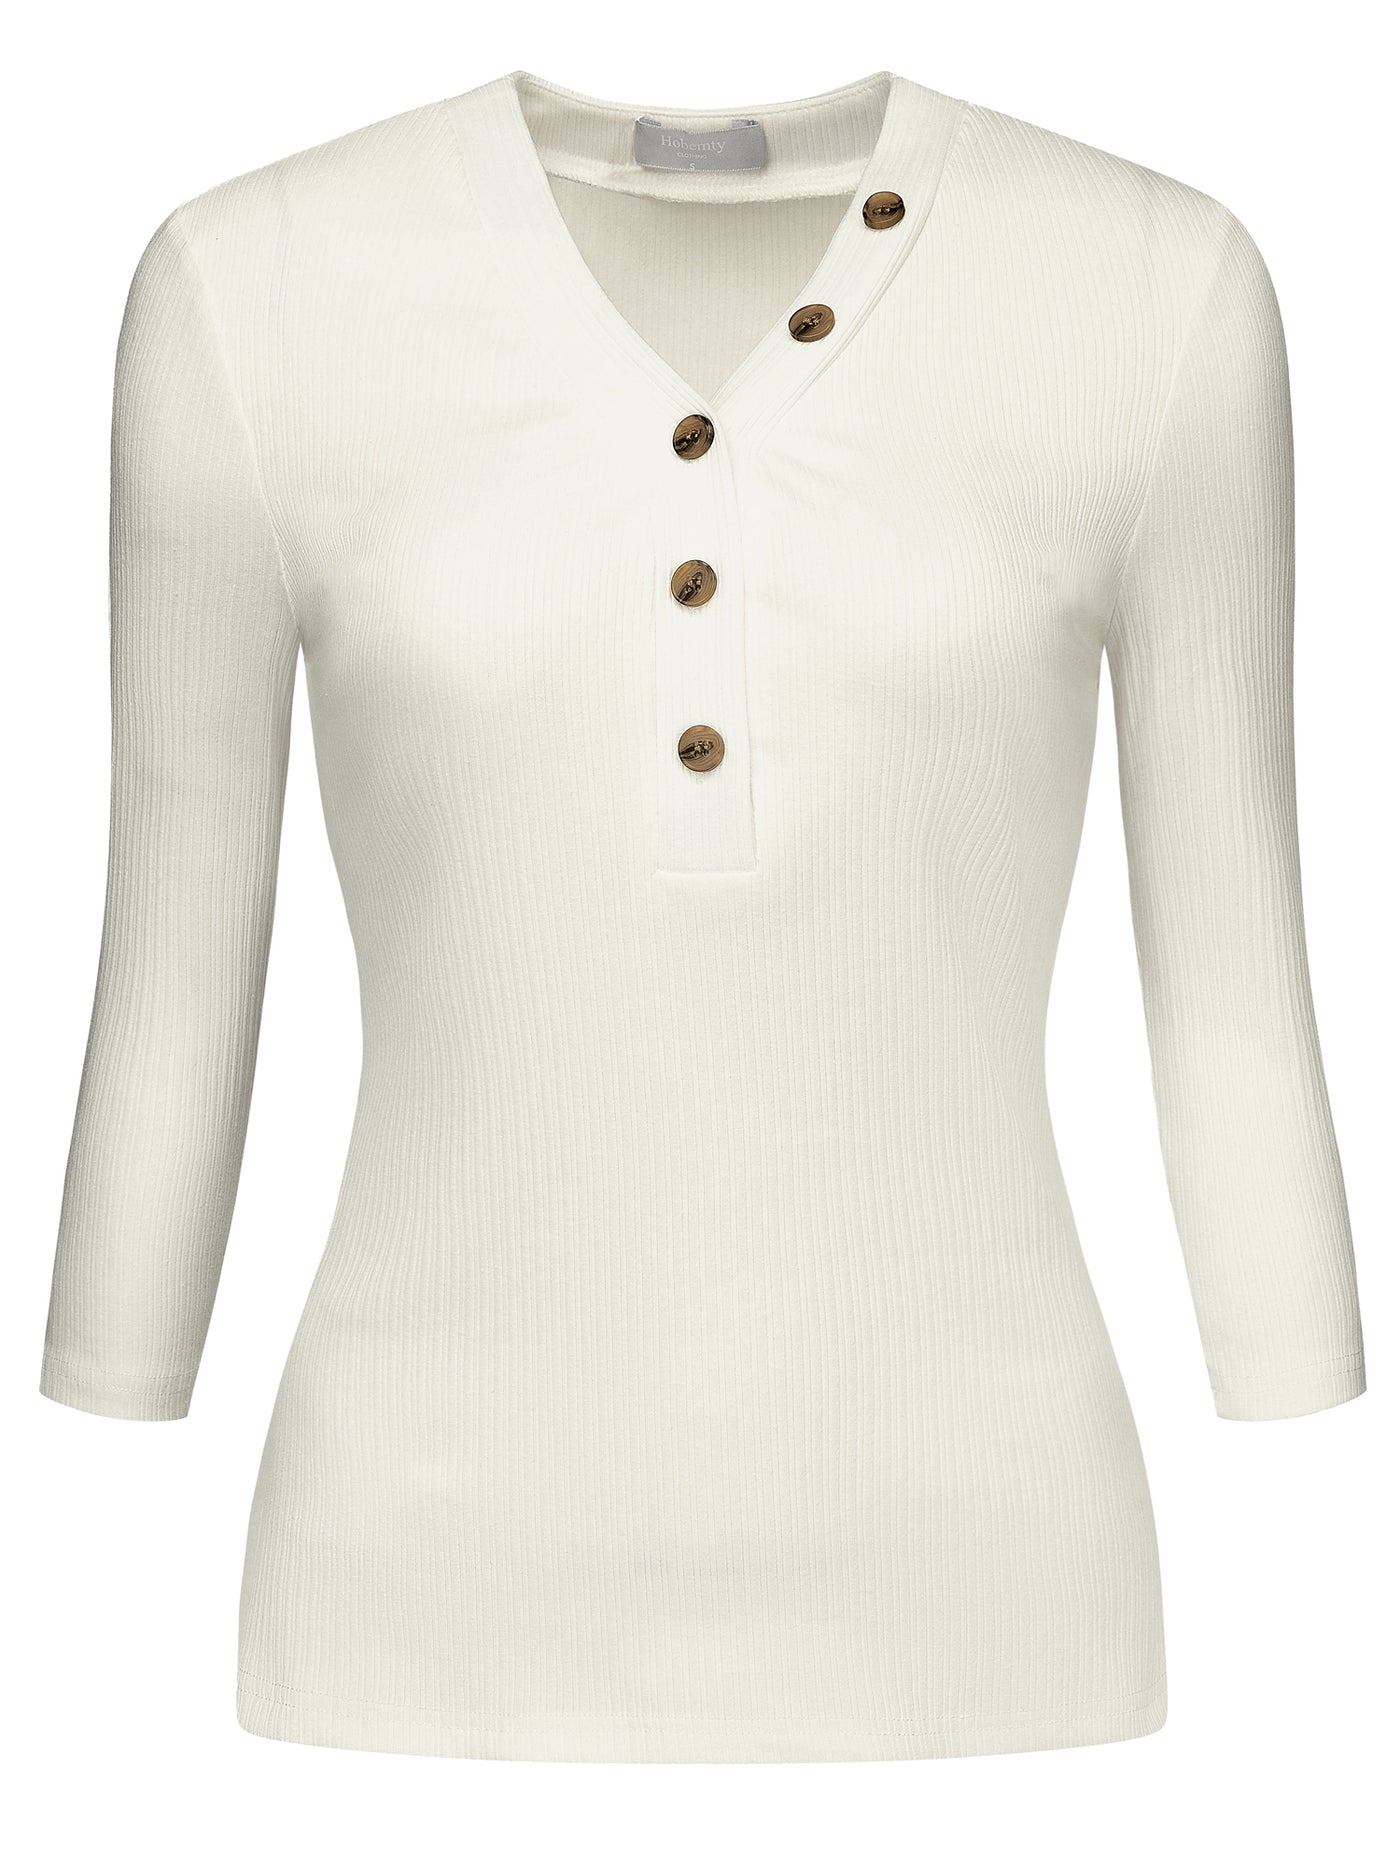 Bublédon Women's Button V Neck Blouse Basic Long Sleeve Knitted Tops